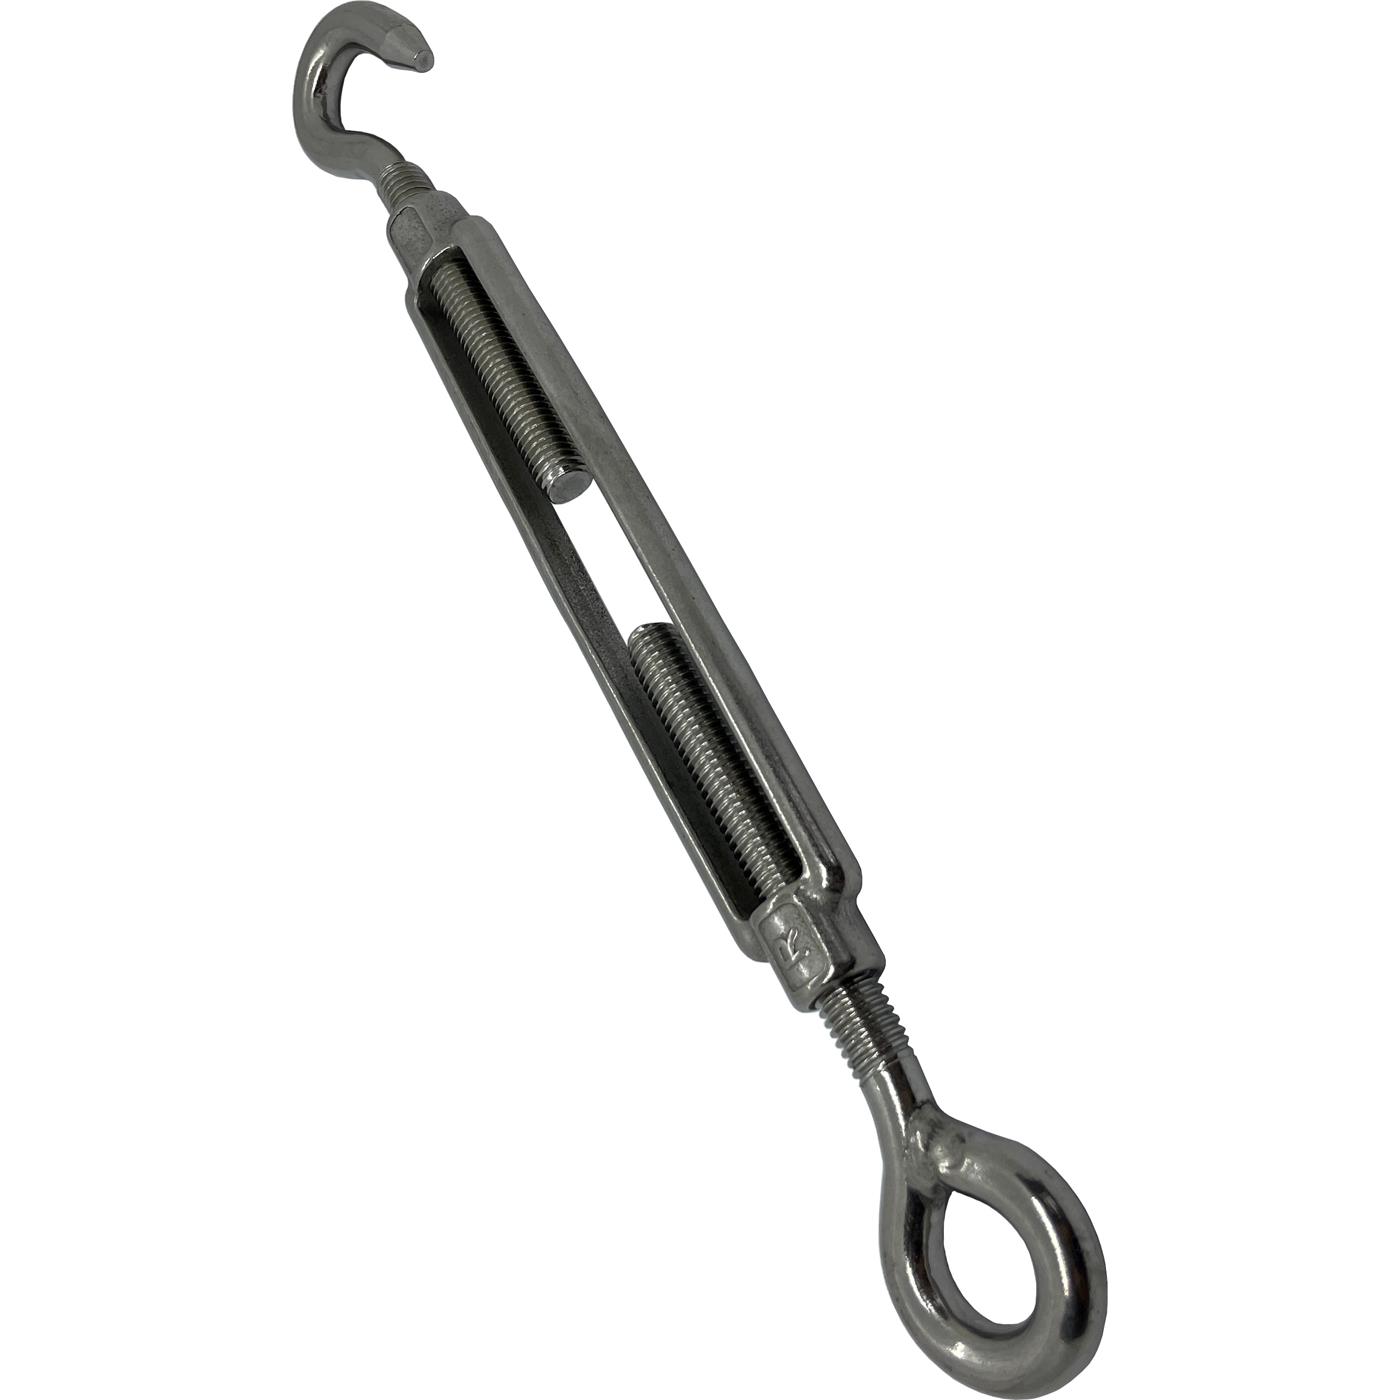 Rope tensioner Eyelet-Hook Stainless steel V2A 304 M12 Turnbuckle Shroud clamp